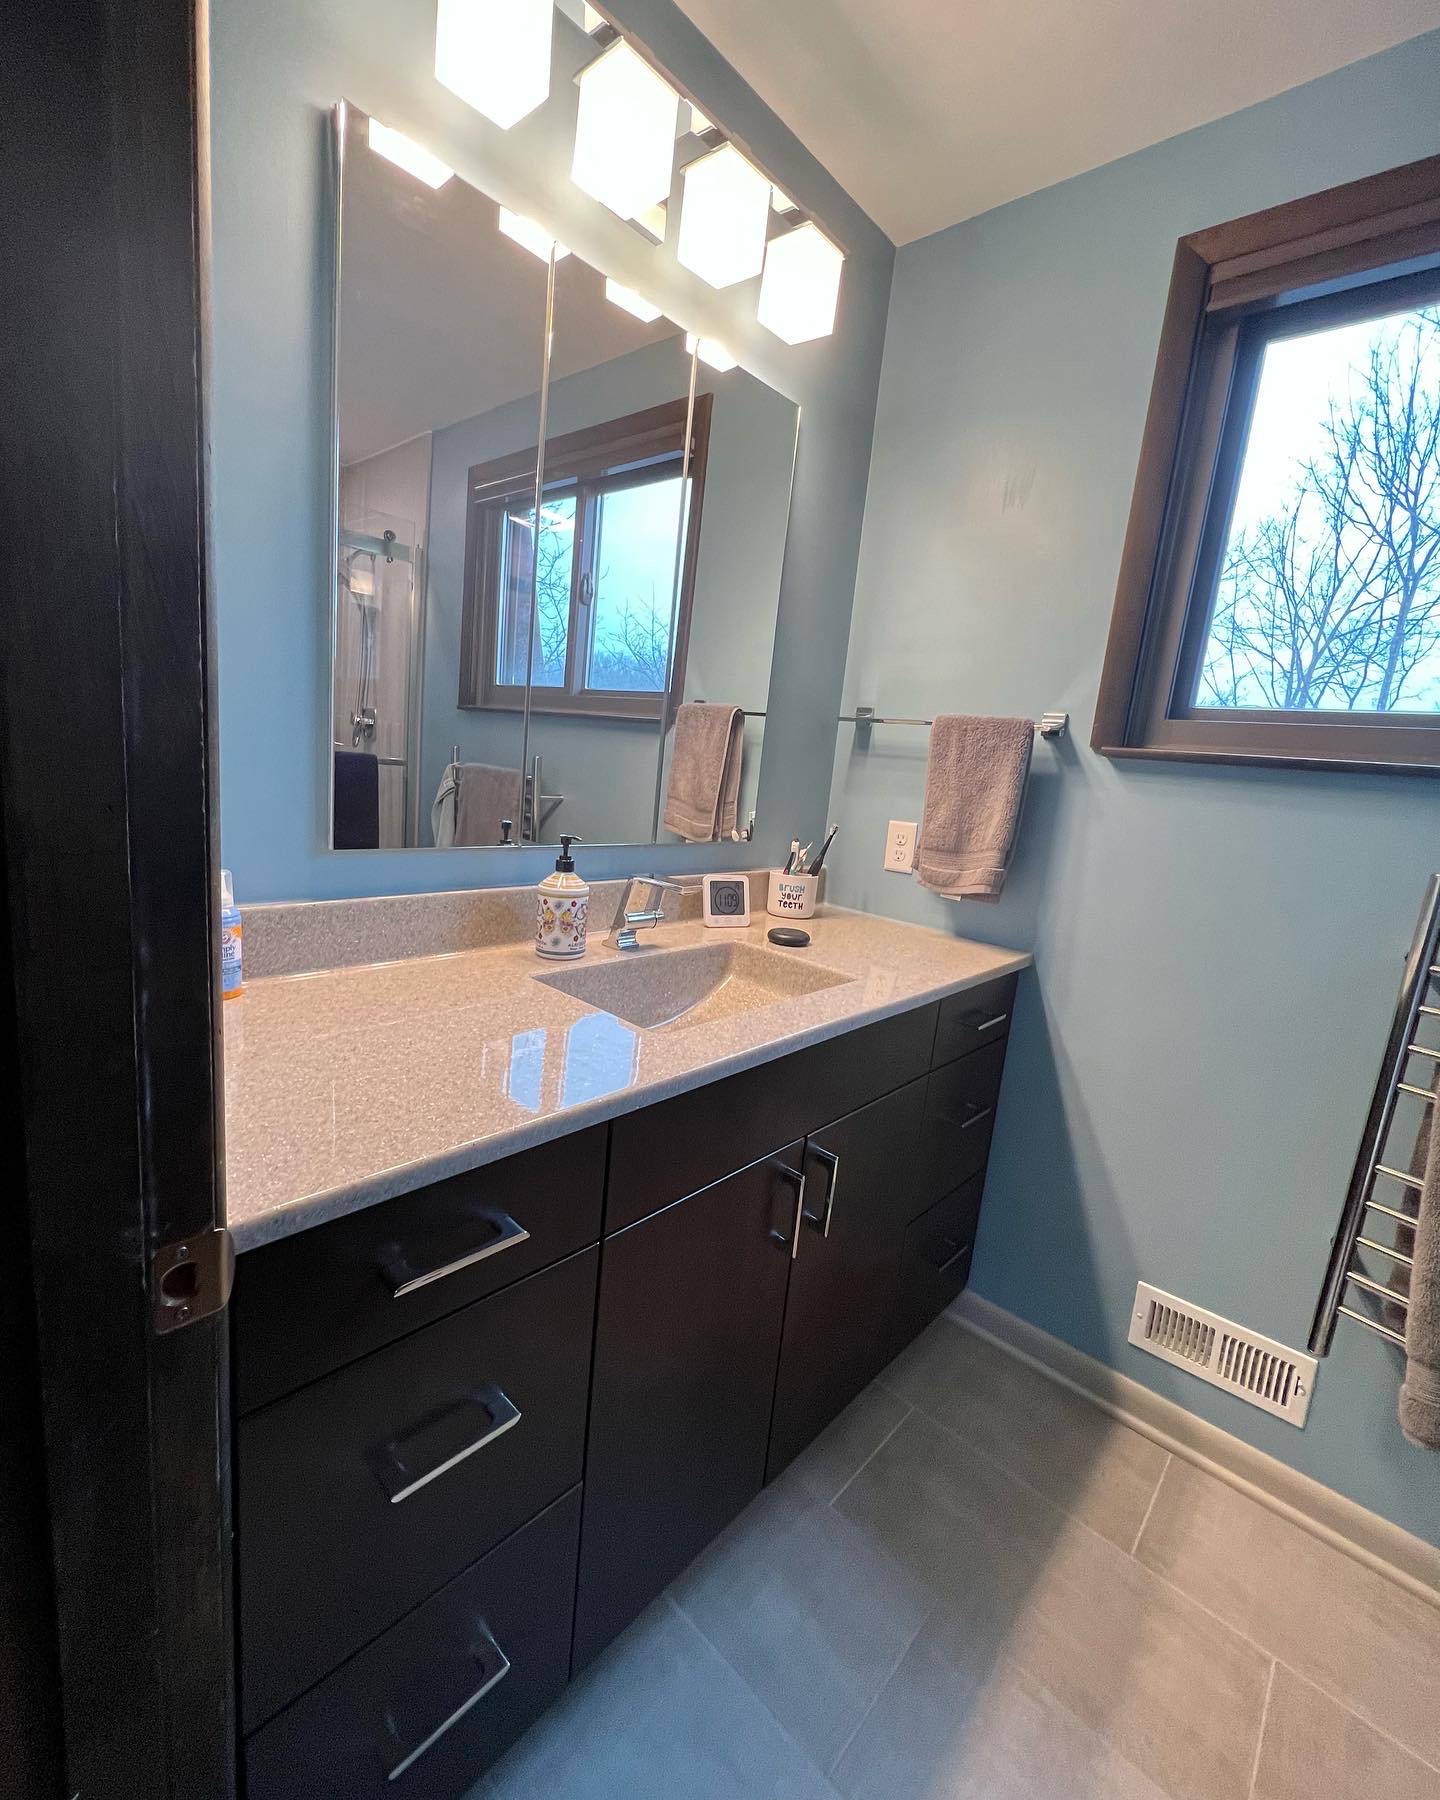 Classic bathroom remodel, light blue walls, light color marble countertop sink, dark cabinet storage, window